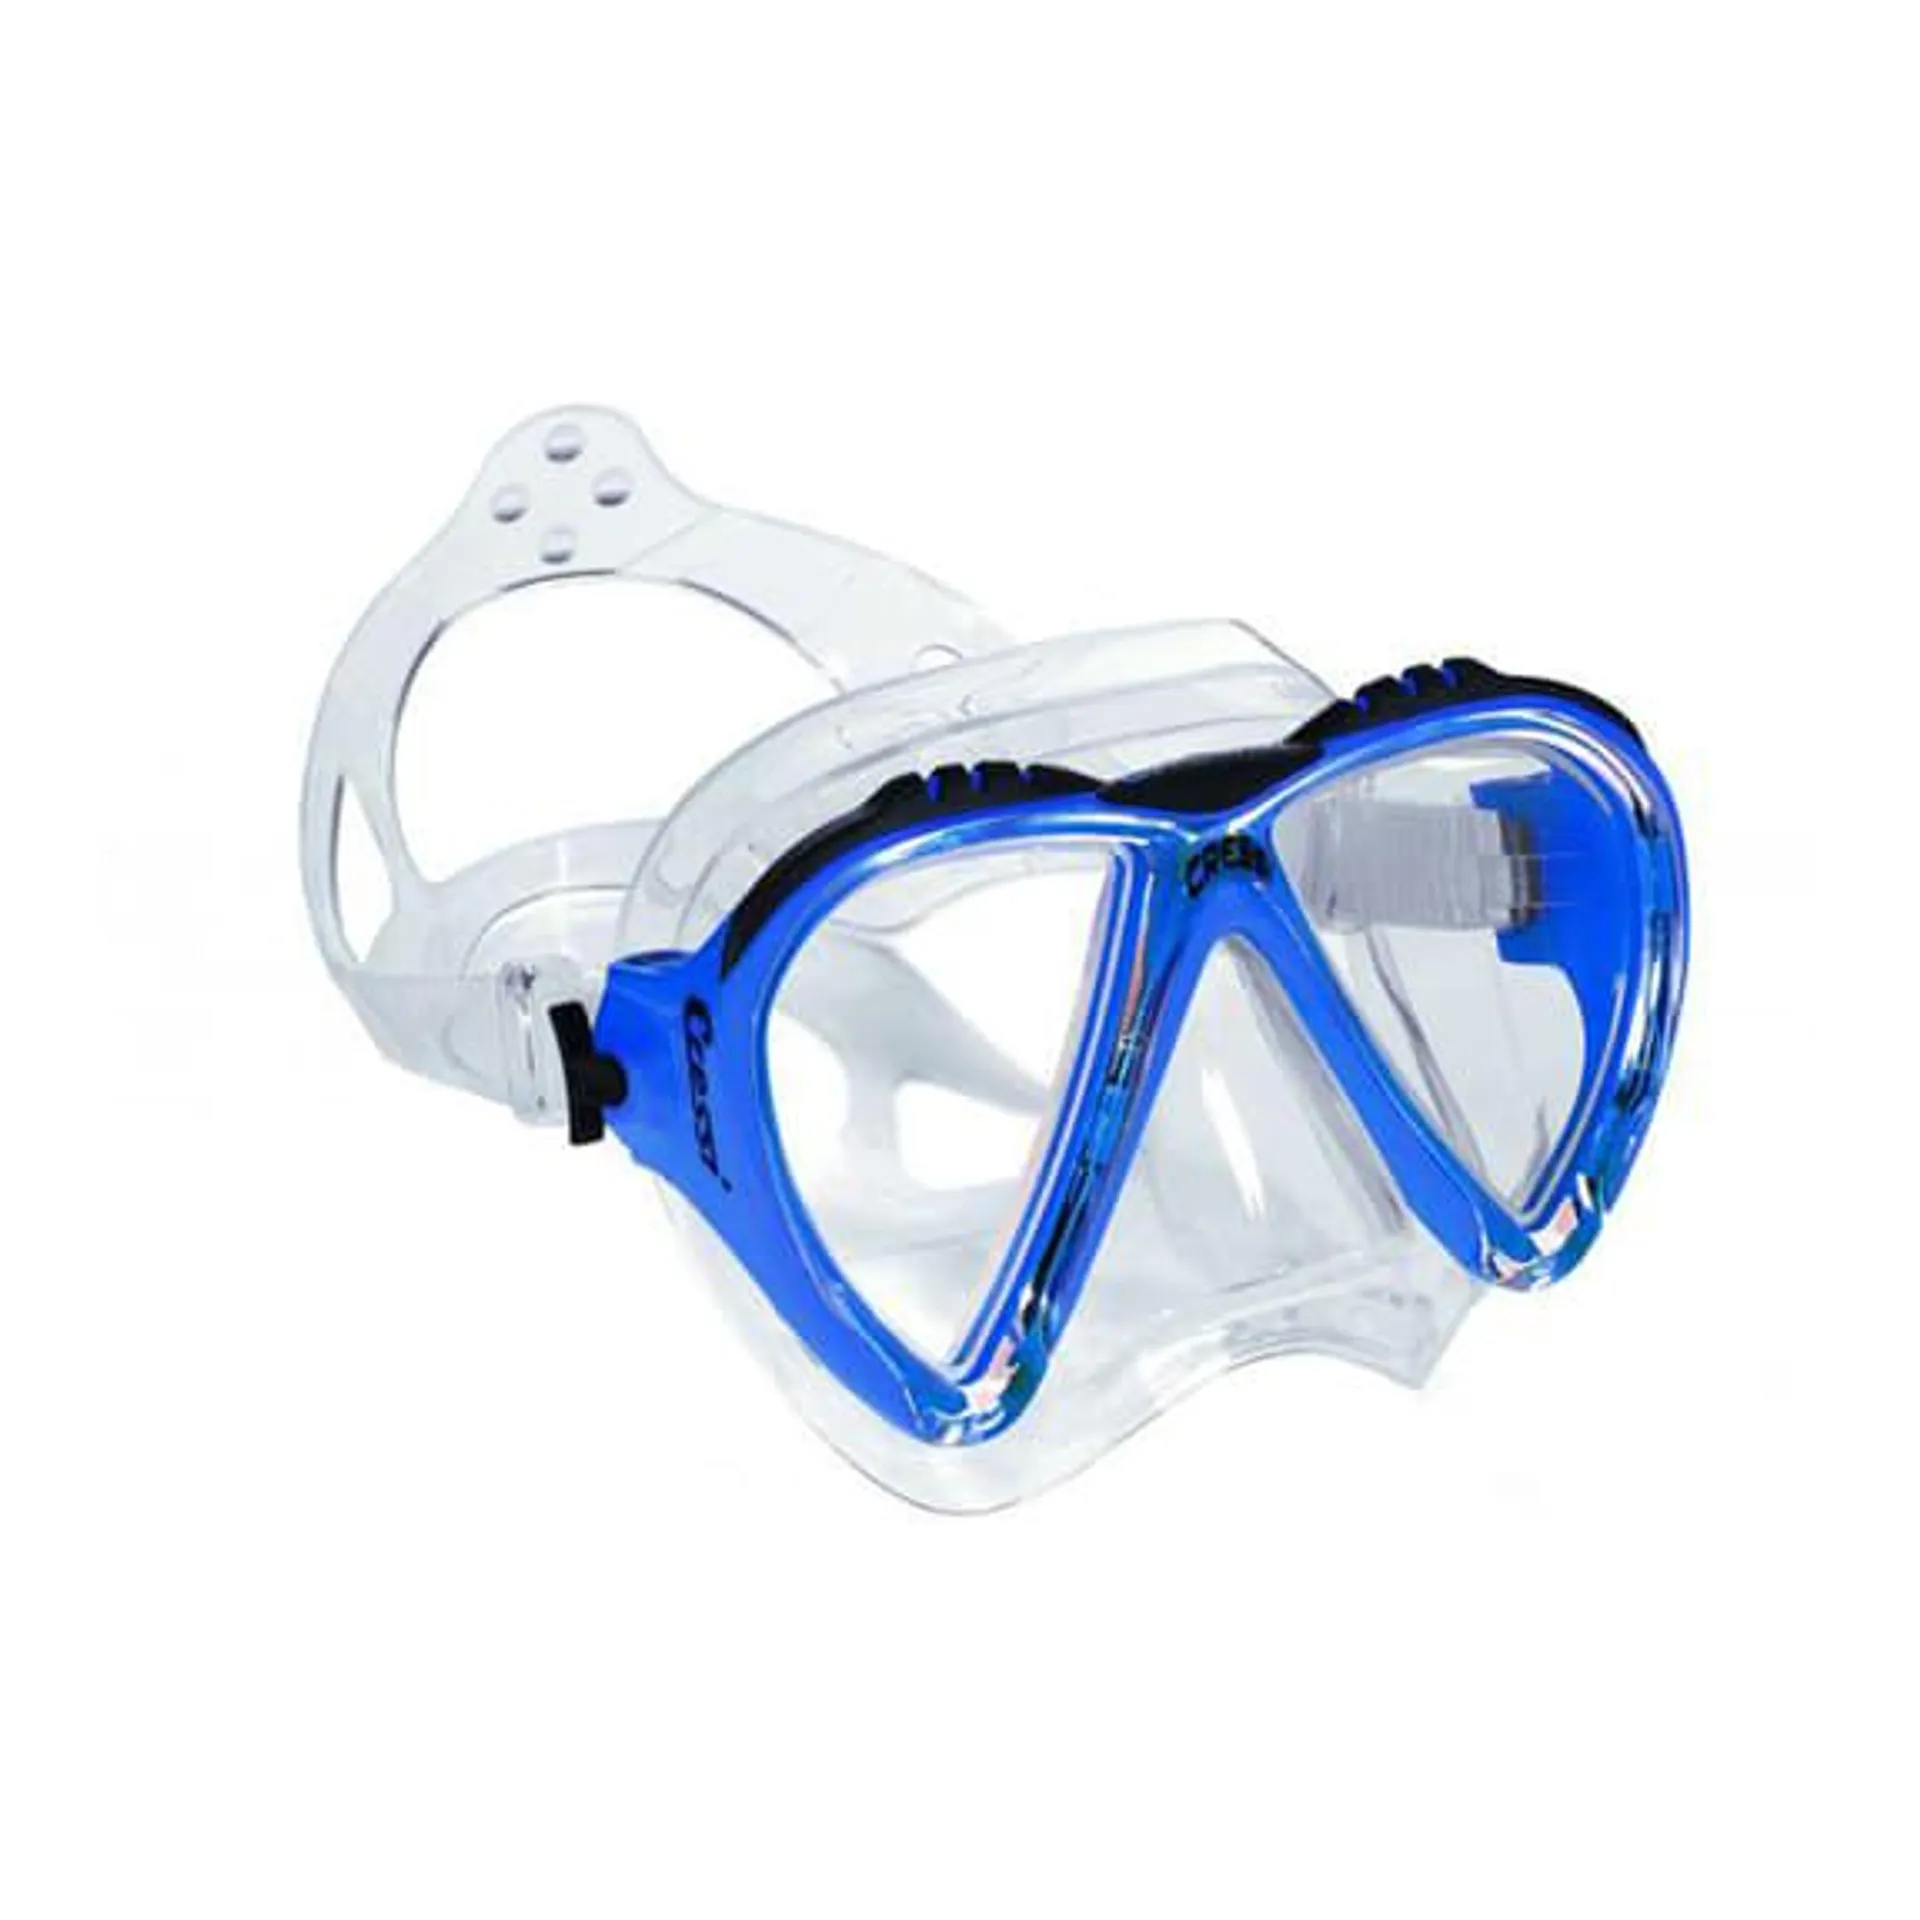 Masque de plongée Cressi Lince 2 blanc bleu avec verres transparents